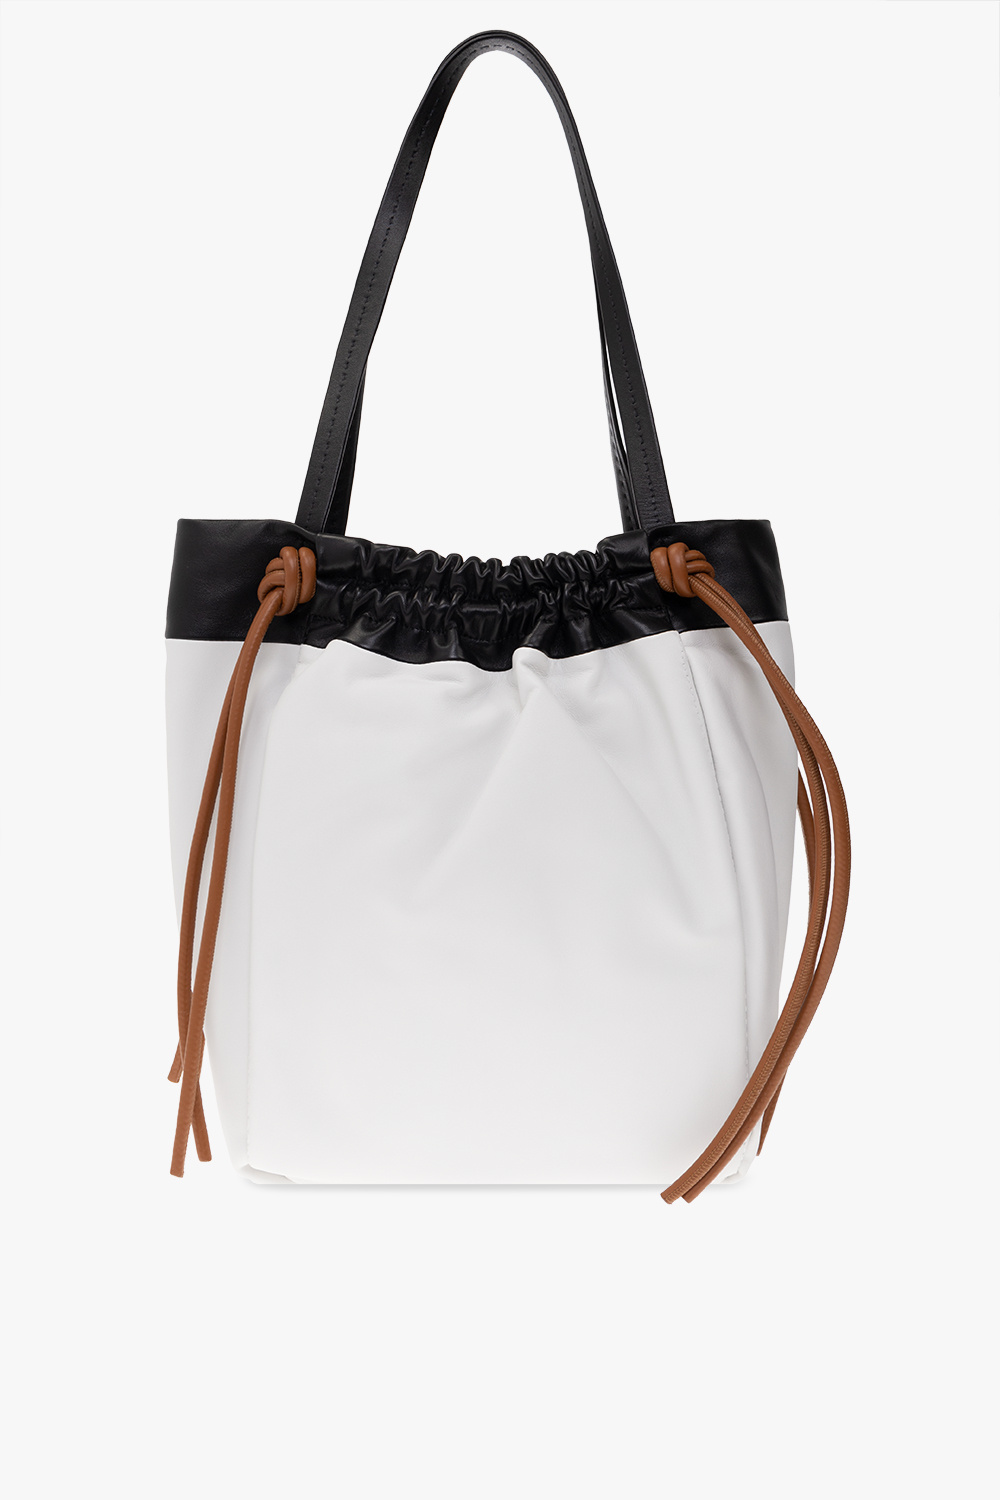 Proenza Schouler ‘Drawstring’ shopper bag